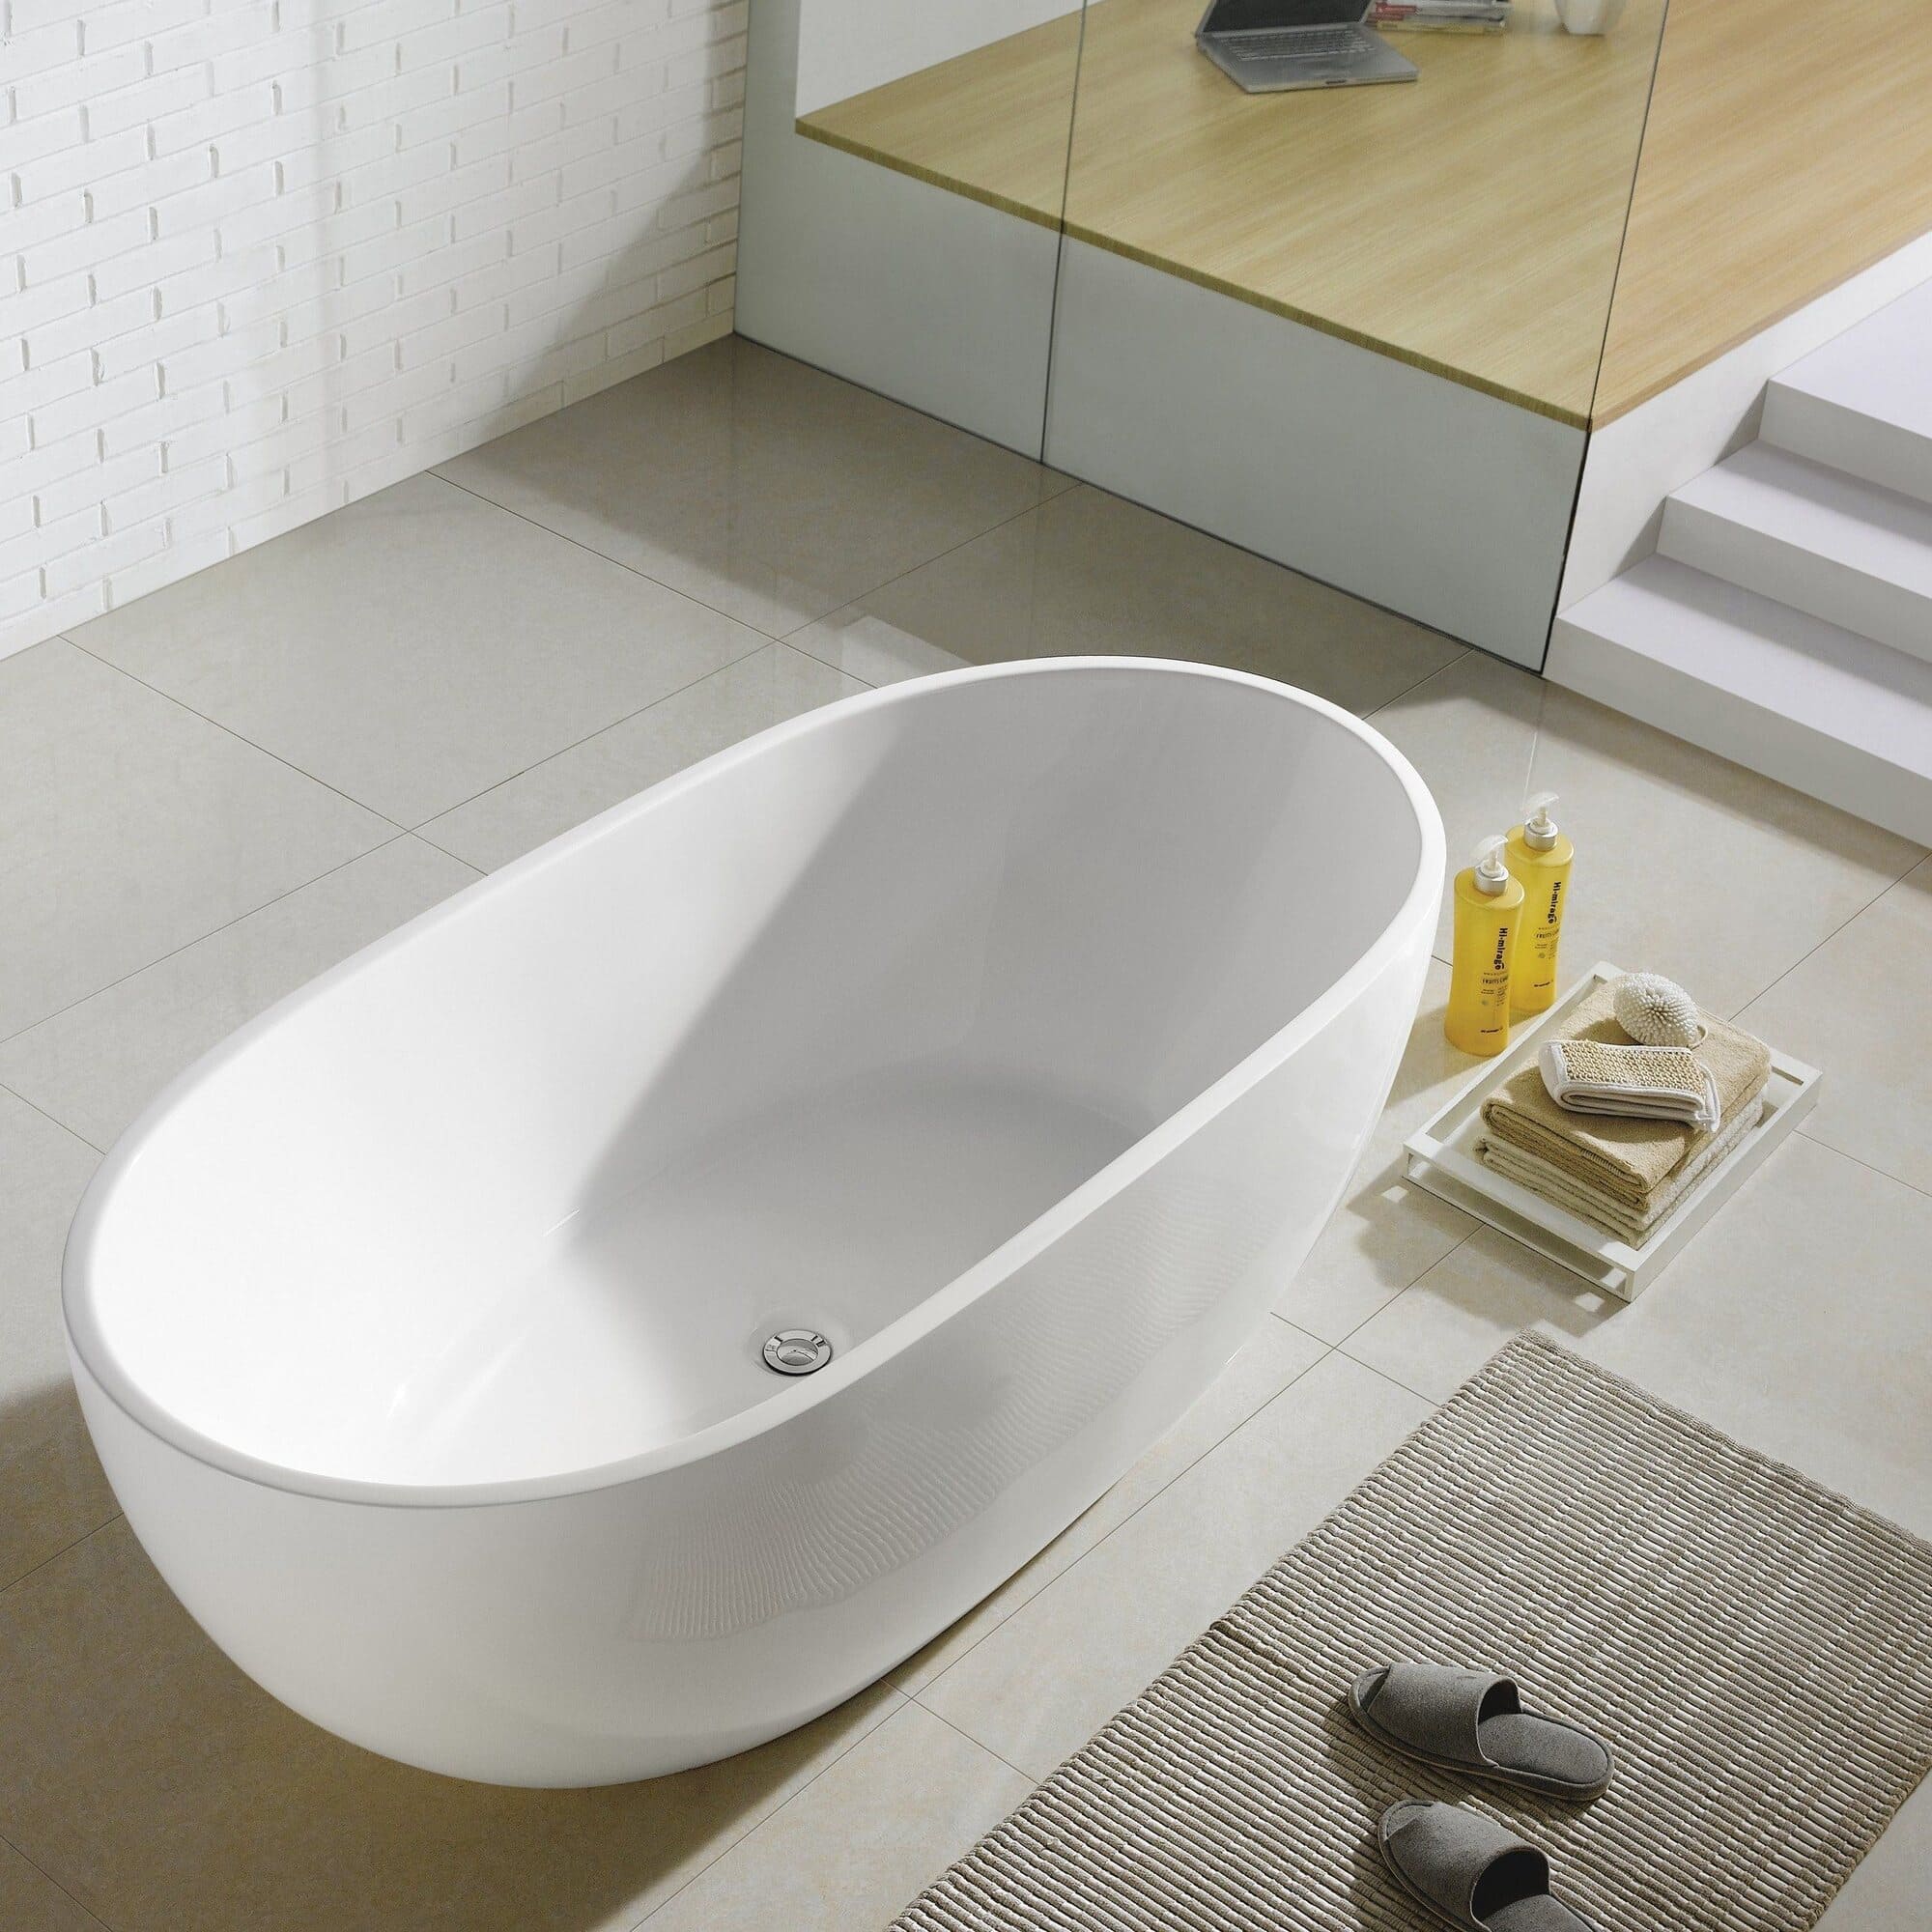 Small bath inspiration for small bathrooms | Roca Life